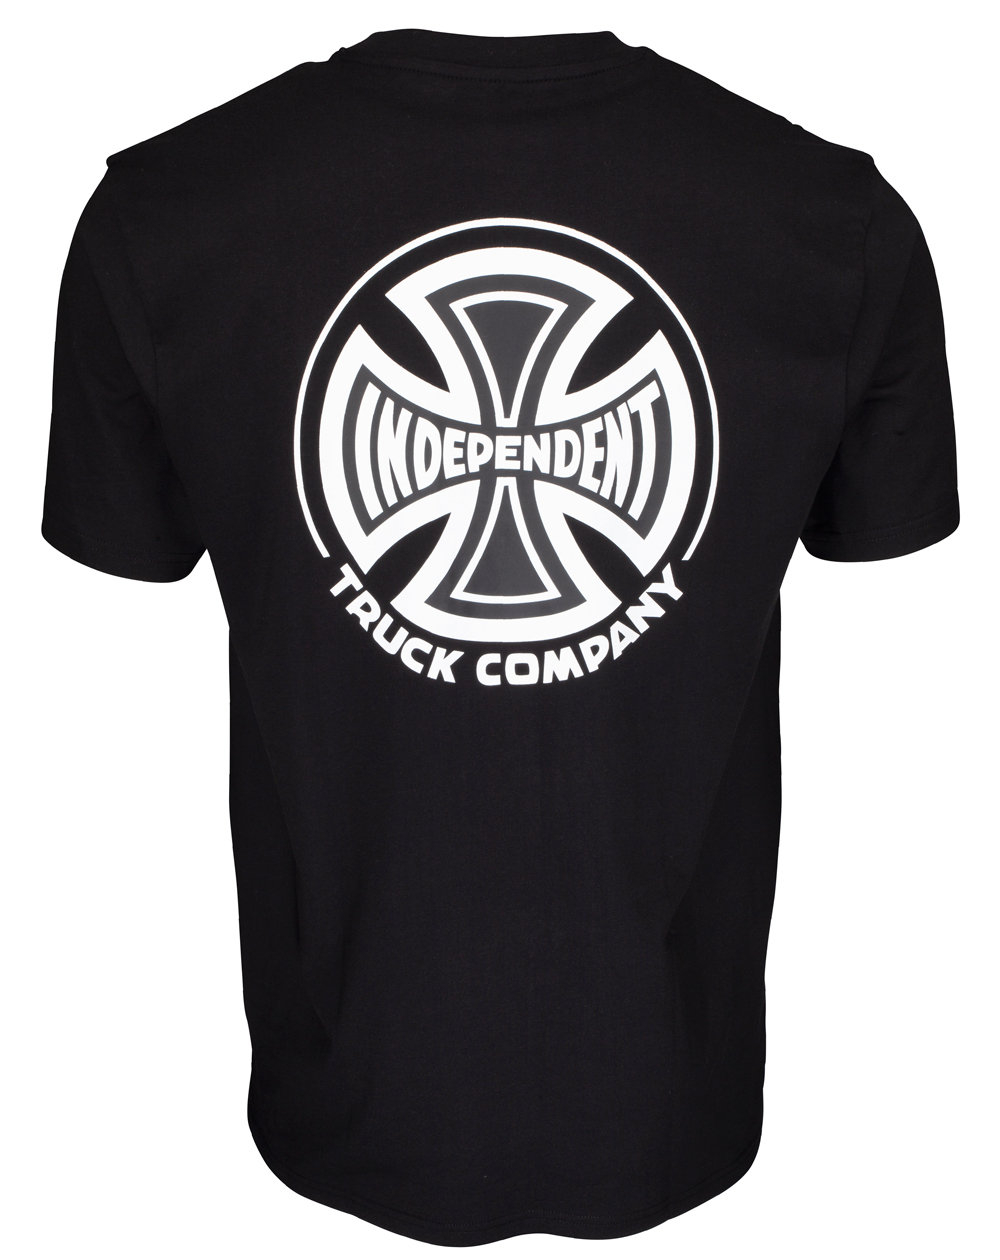 Independent Men's T-Shirt B/C Black